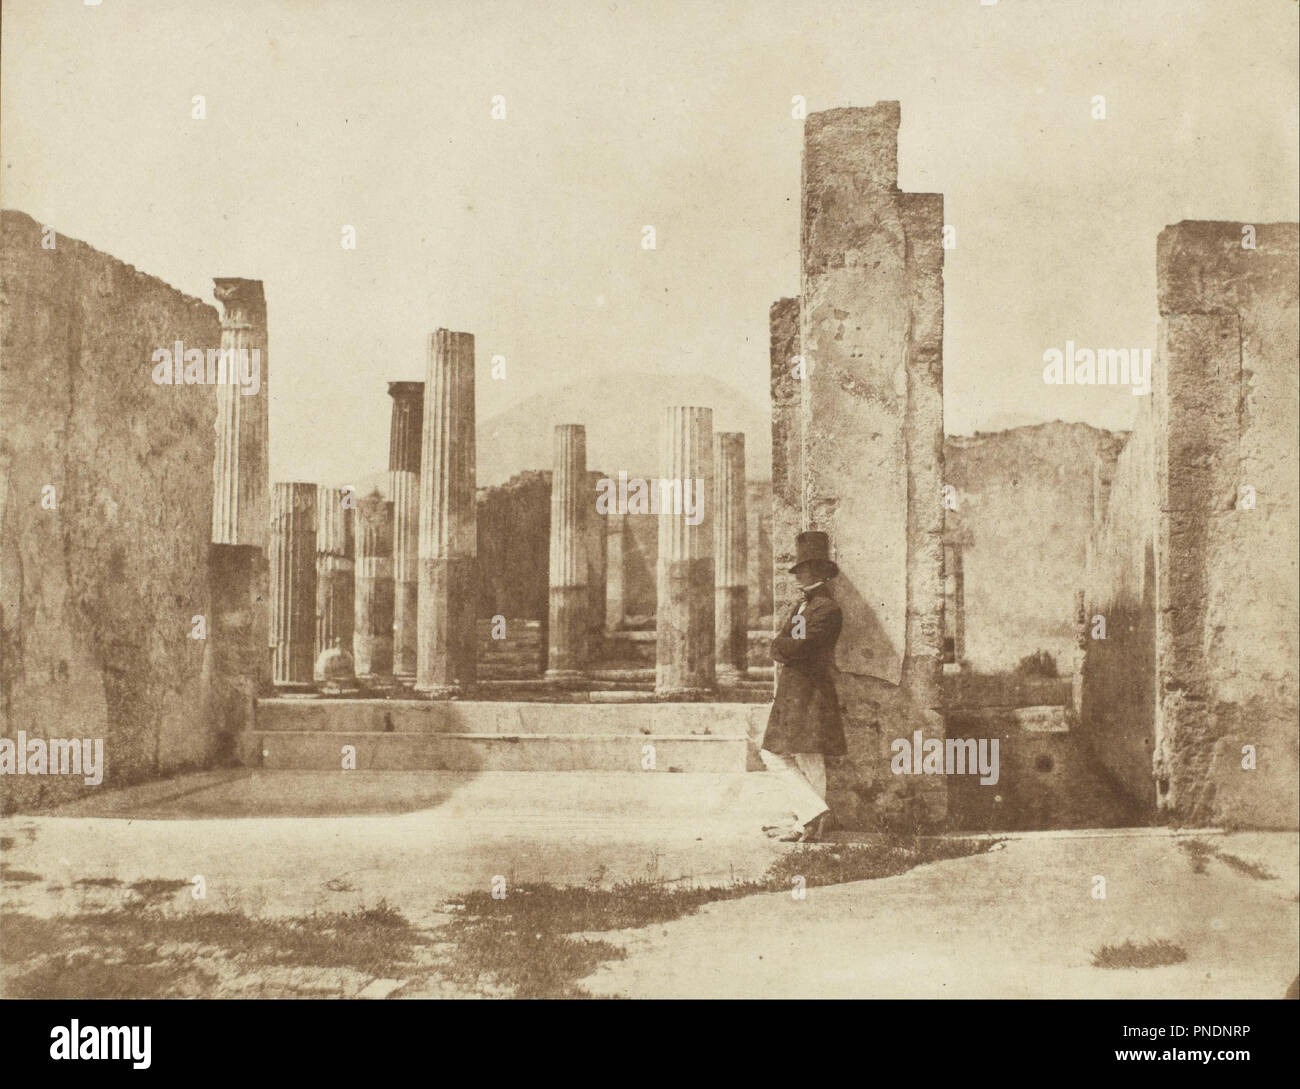 House of Sallust, Pompeii. Date/Period: 1846. Salted paper print. Width: 25.1 cm. Height: 19.5 cm (sheet). Author: The Rev. Calvert Richard Jones, Jr. Stock Photo